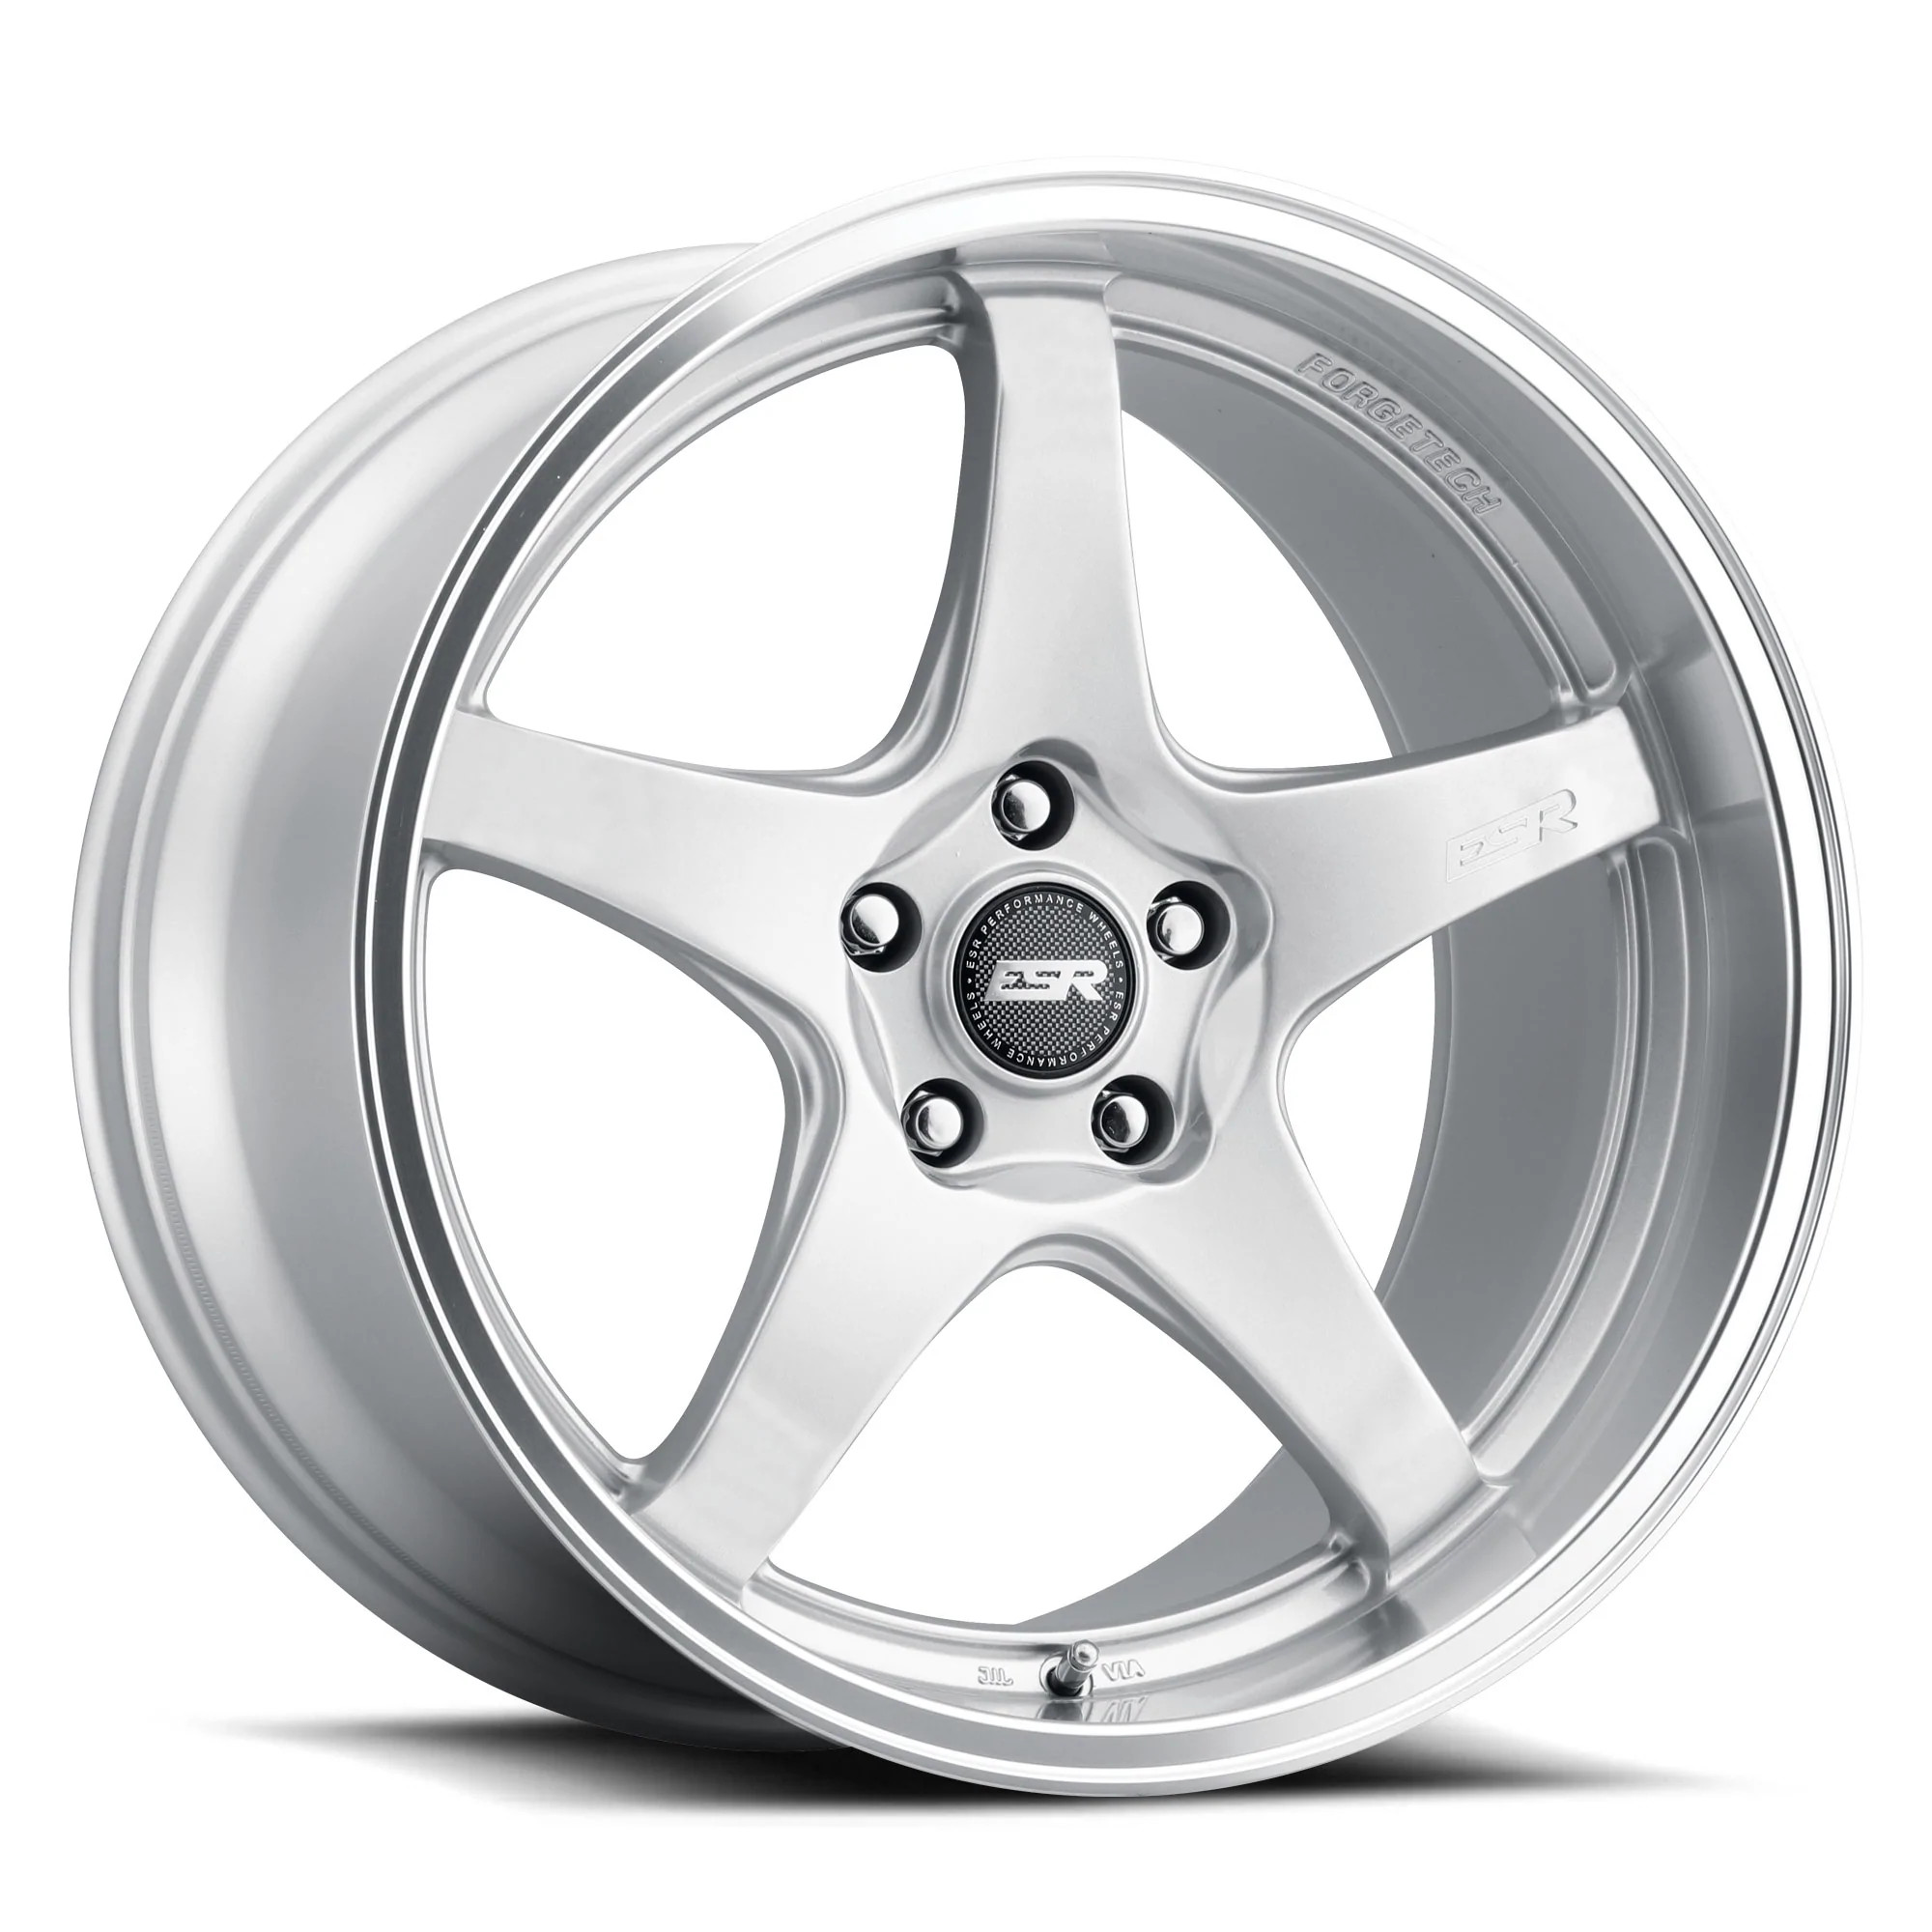 ESR Wheels APEX AP5 19x9.5 / 5x114.3 BP +22 Hyper Silver Machine Lip